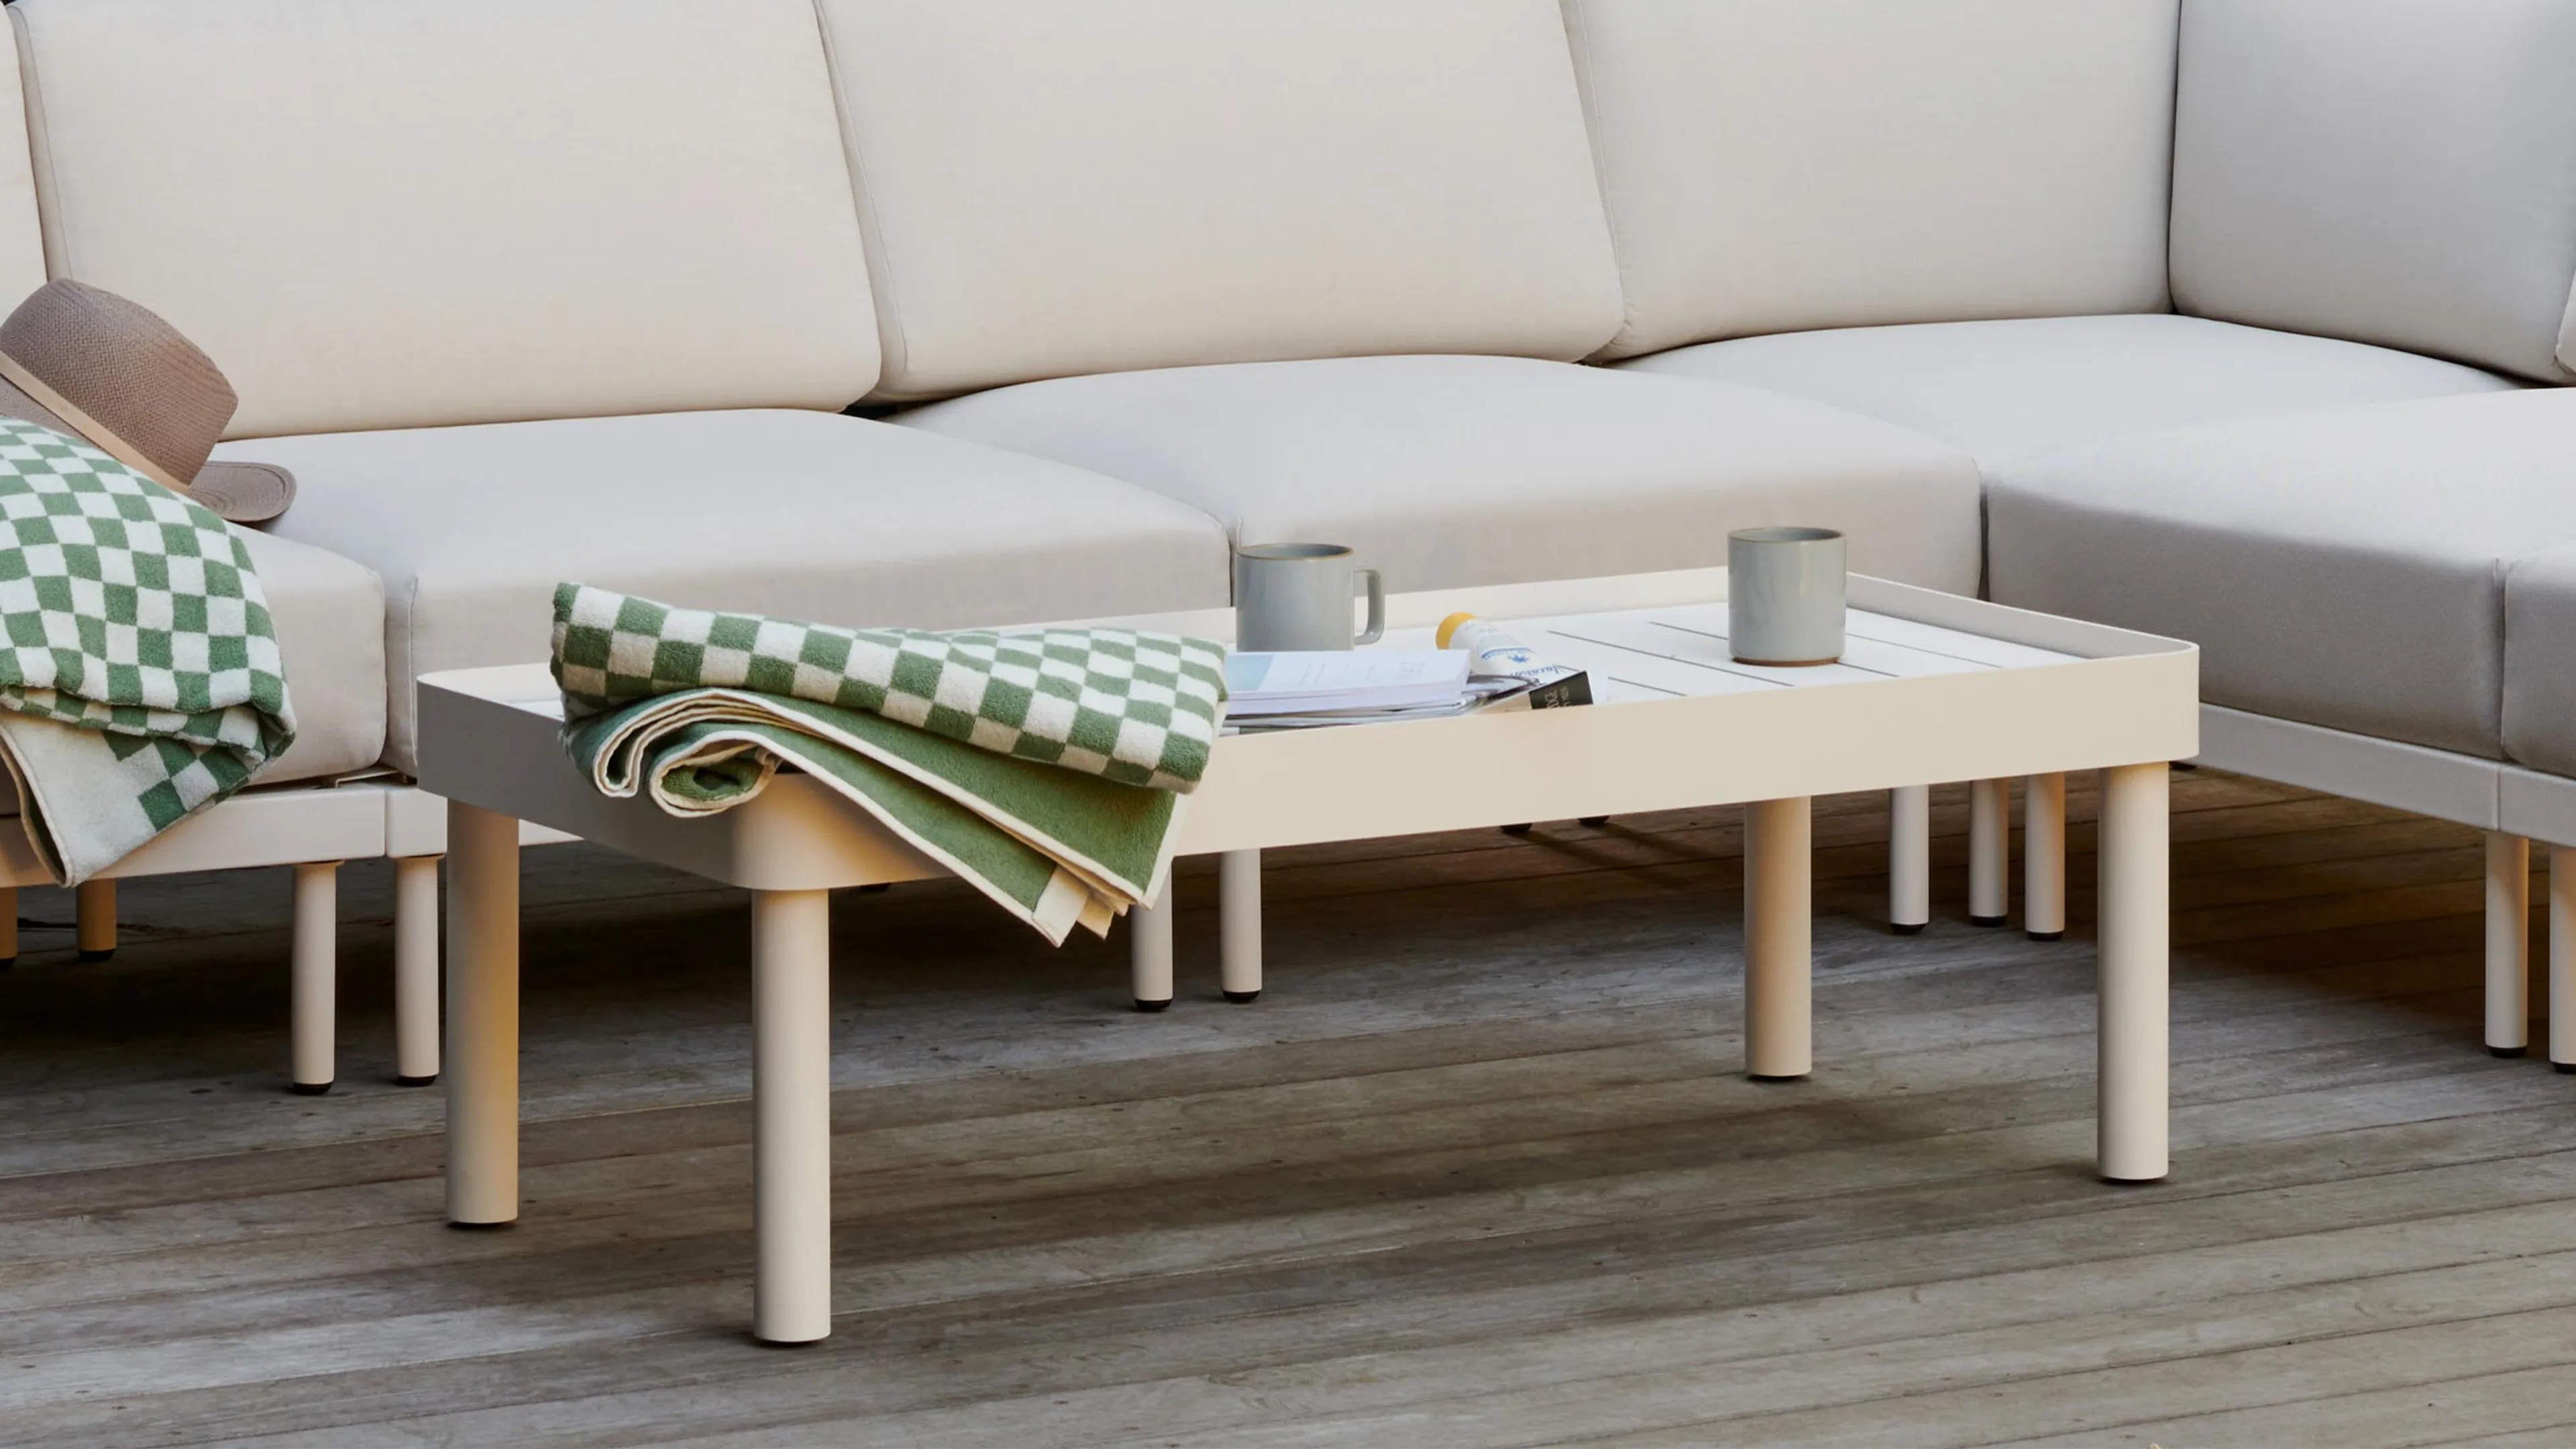 Relay Outdoor 2-Piece Armless Sofa, Chair, & Coffee Table Set